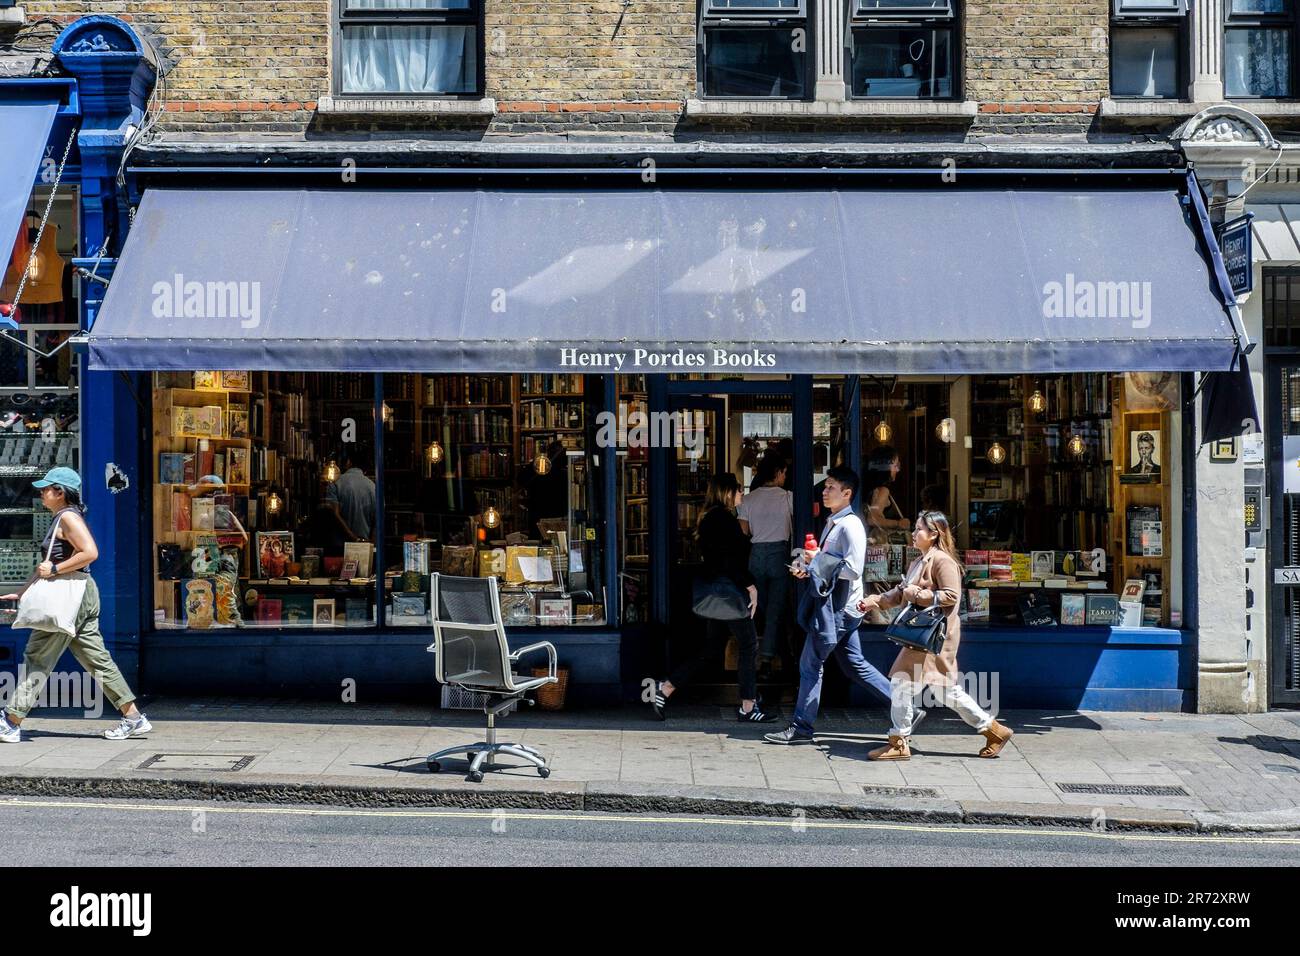 Henry Pordes Books, Charing Cross Road, London, UK. Stock Photo